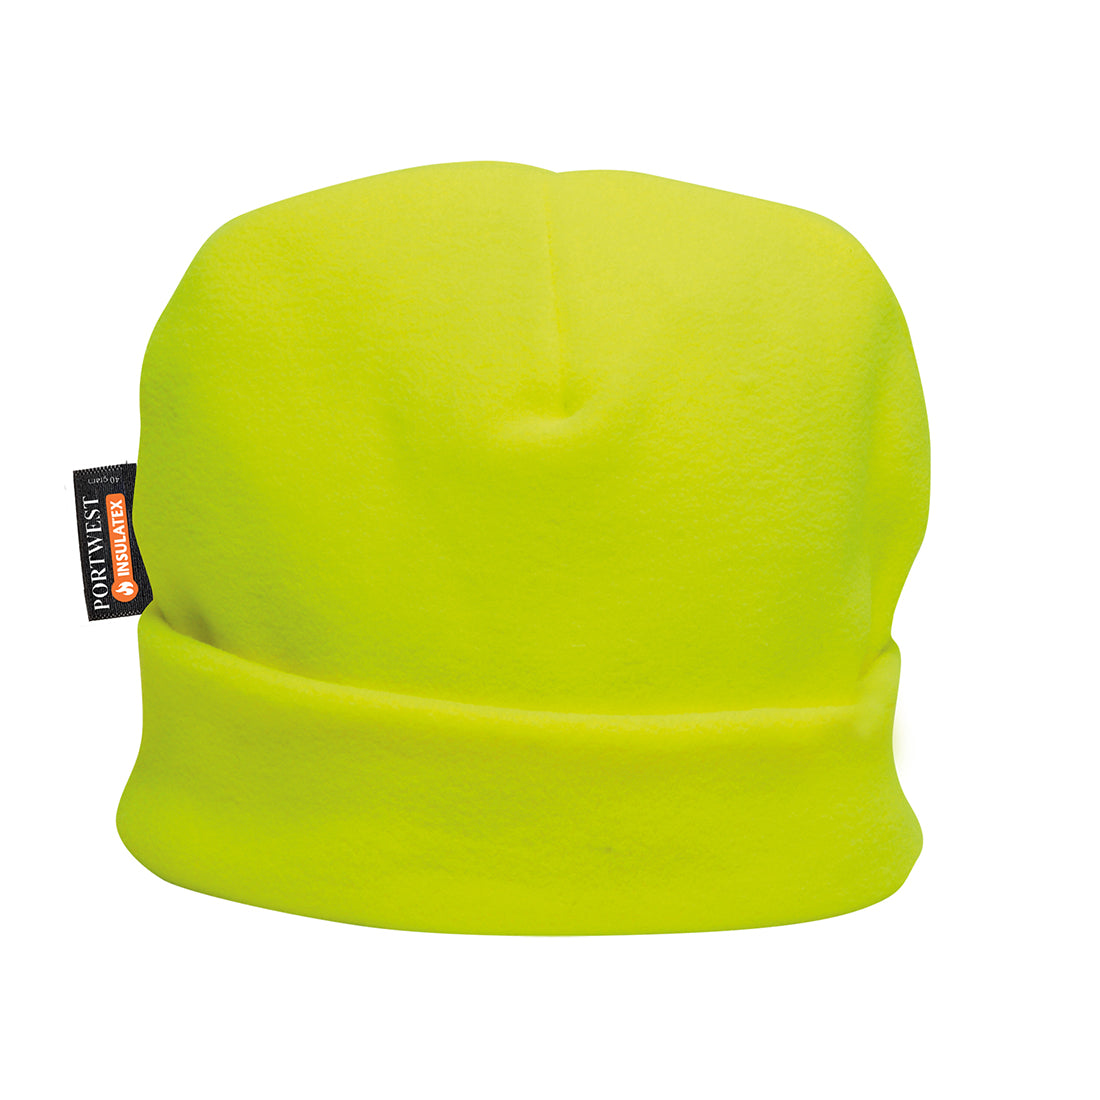 PORTWEST HA10 - Fleece Hat Insulatex Lined (Yellow or Black)